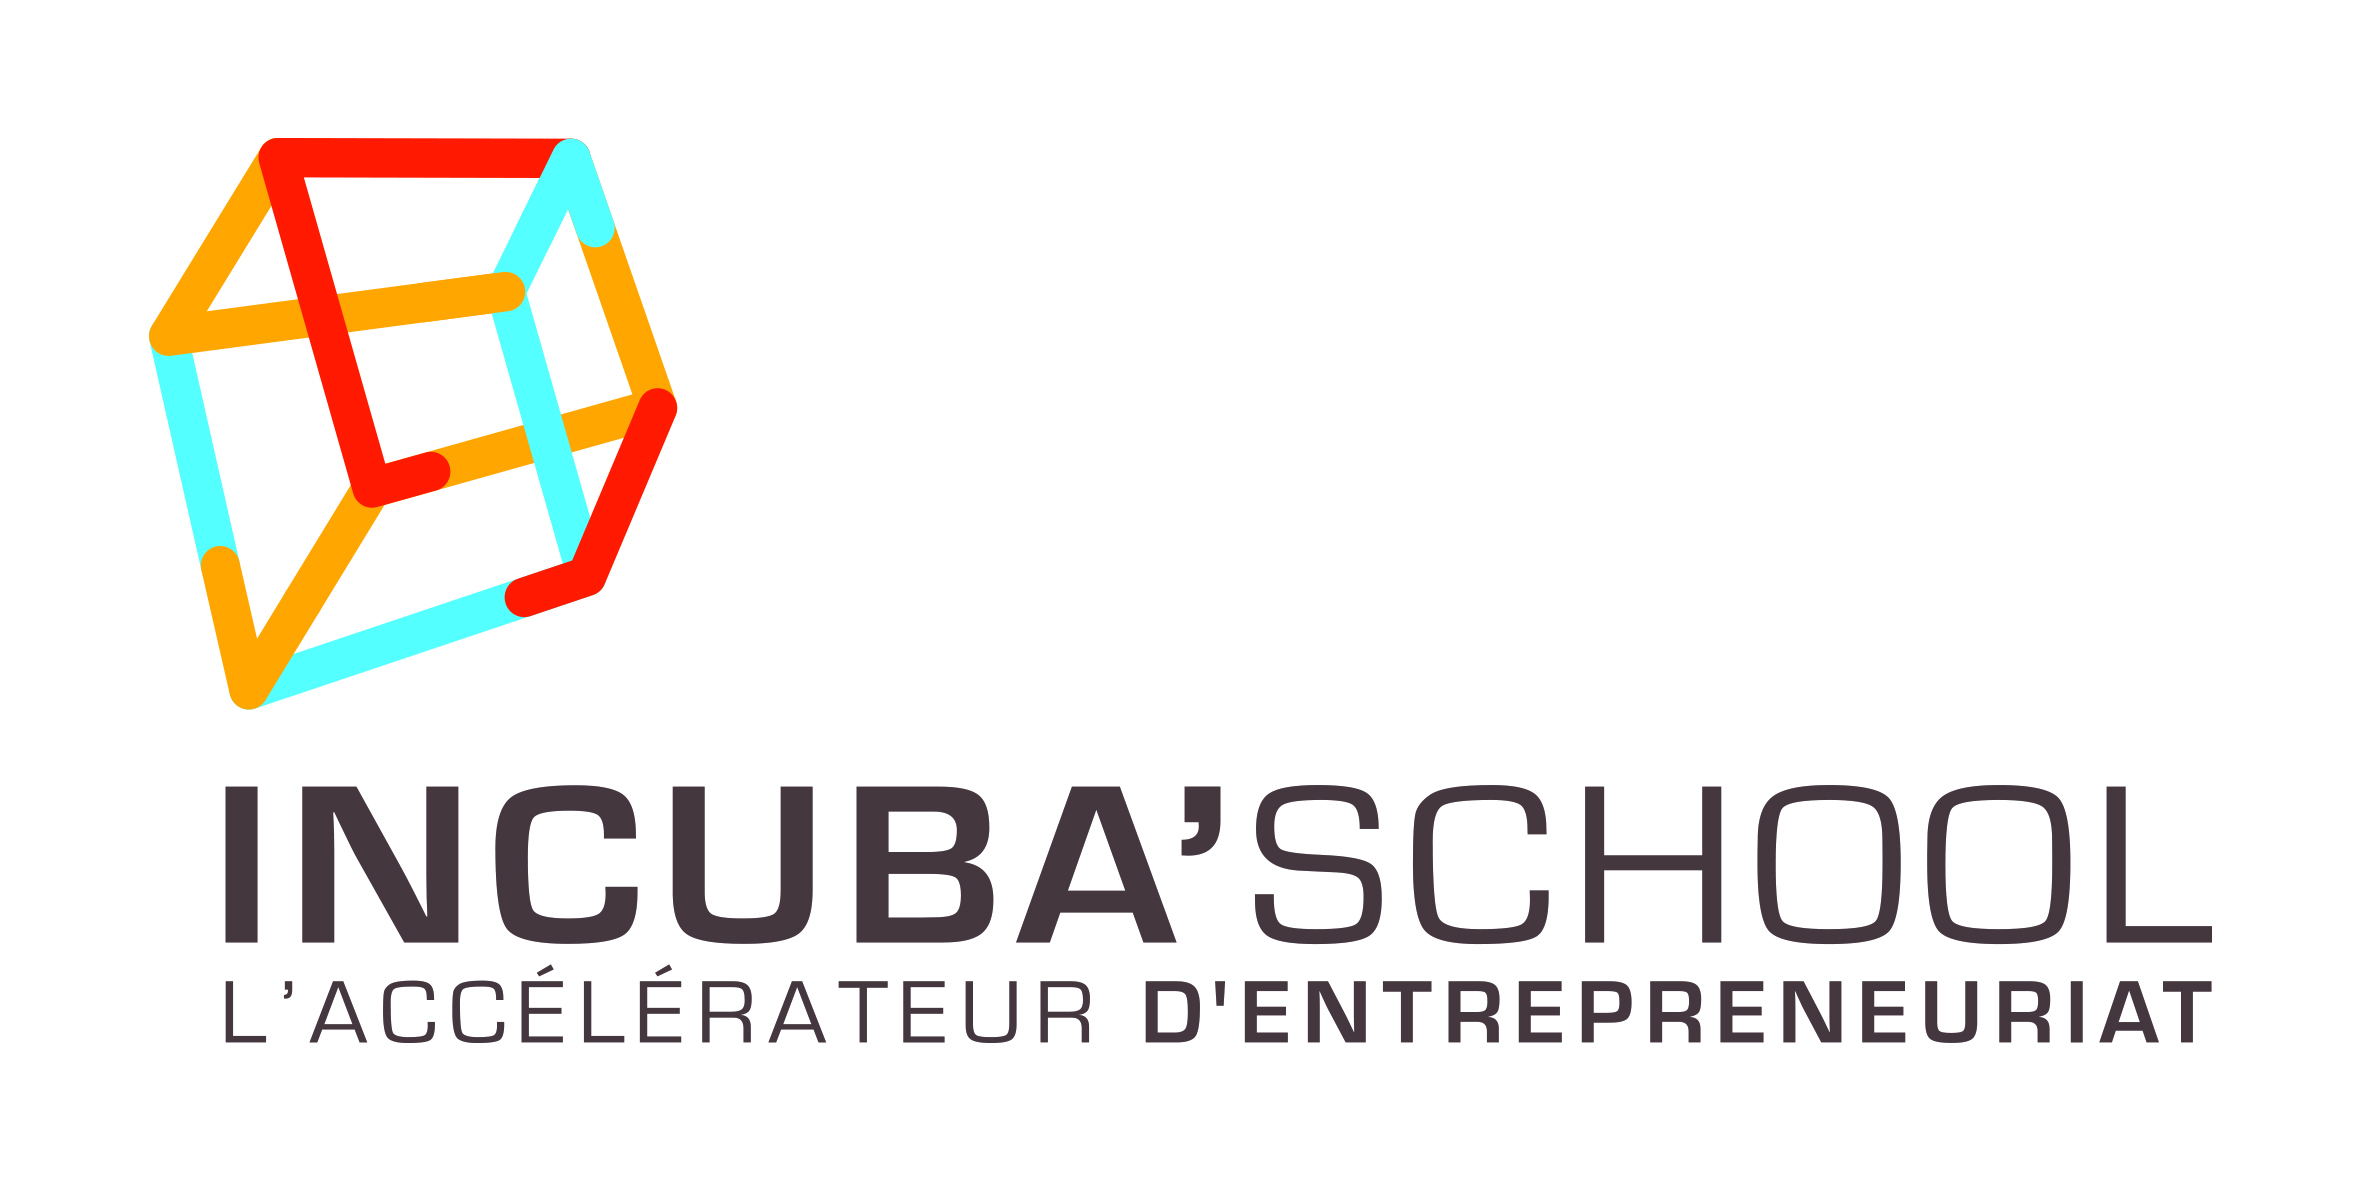 Logo_Incuba'school_avec_claim.jpg